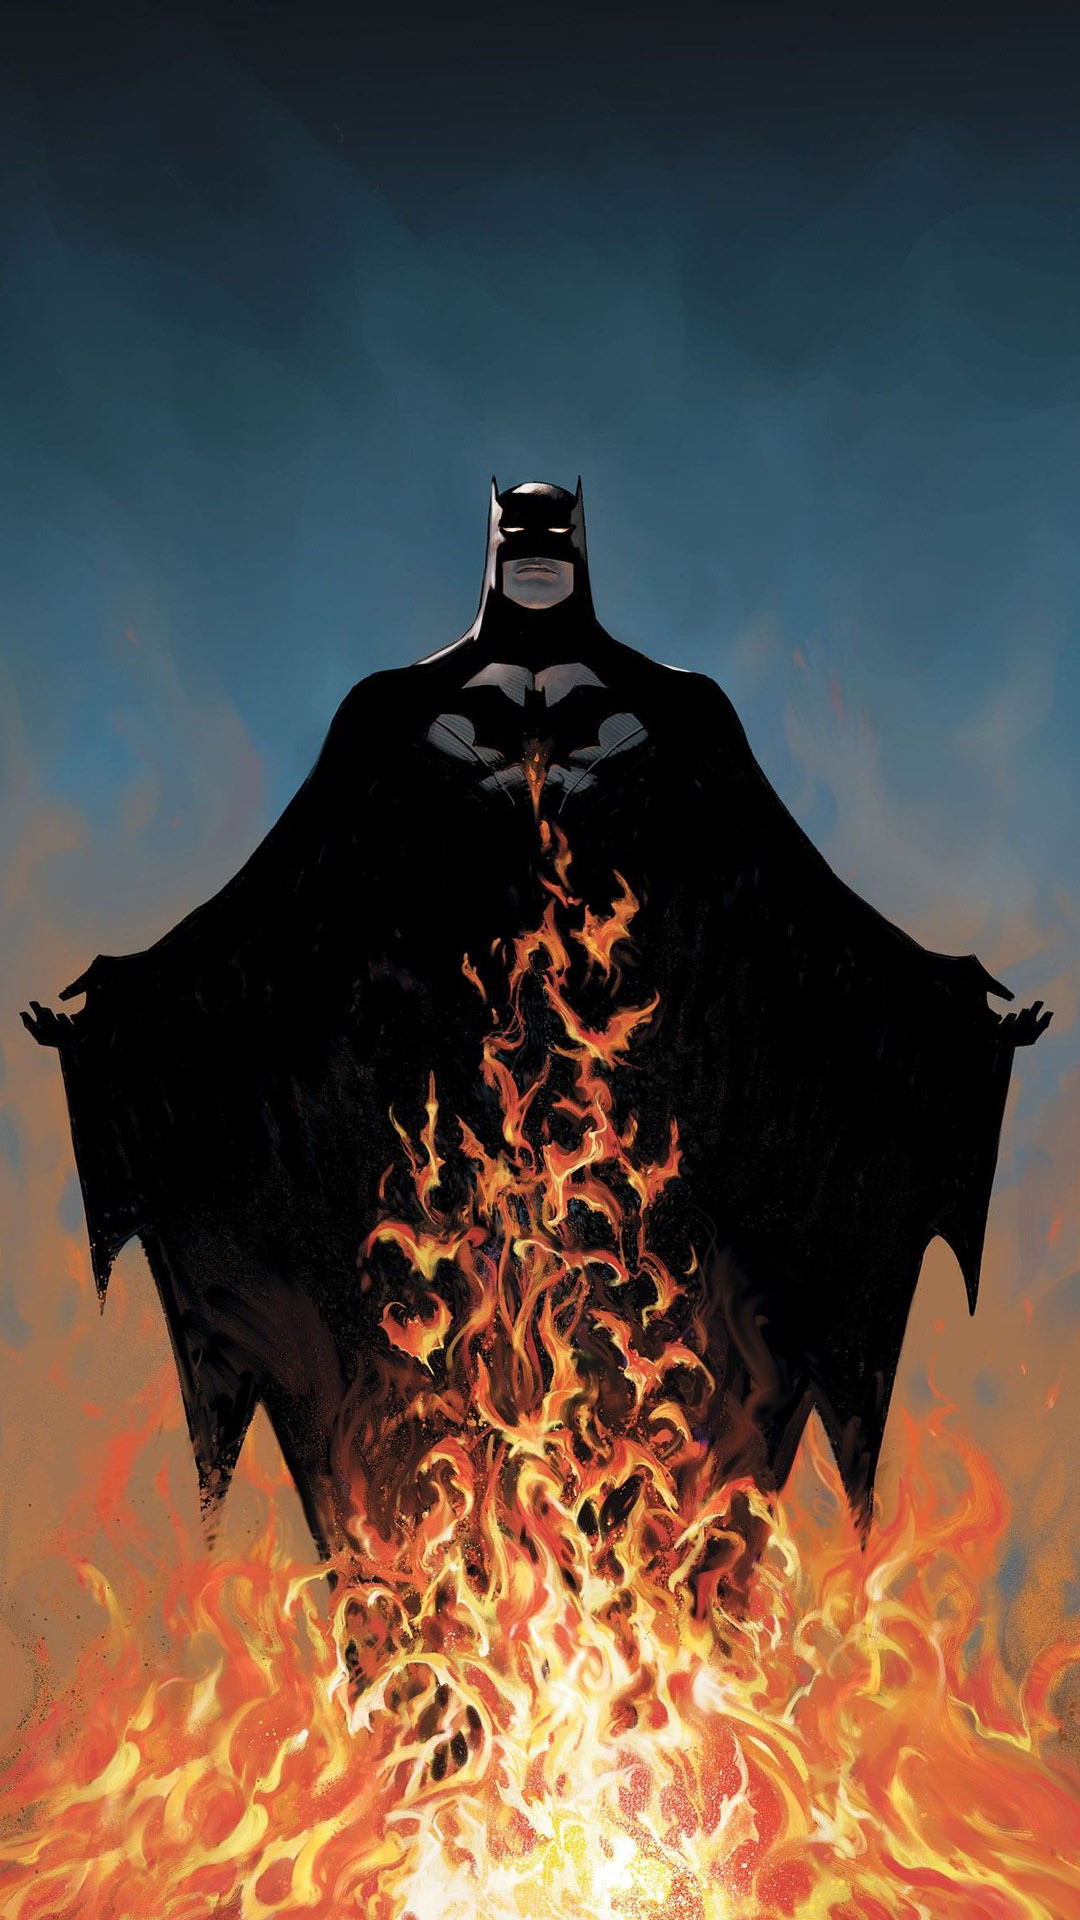 Batman Hd Wallpaper For Mobile And Desktop - Batman Best Comic Art - HD Wallpaper 